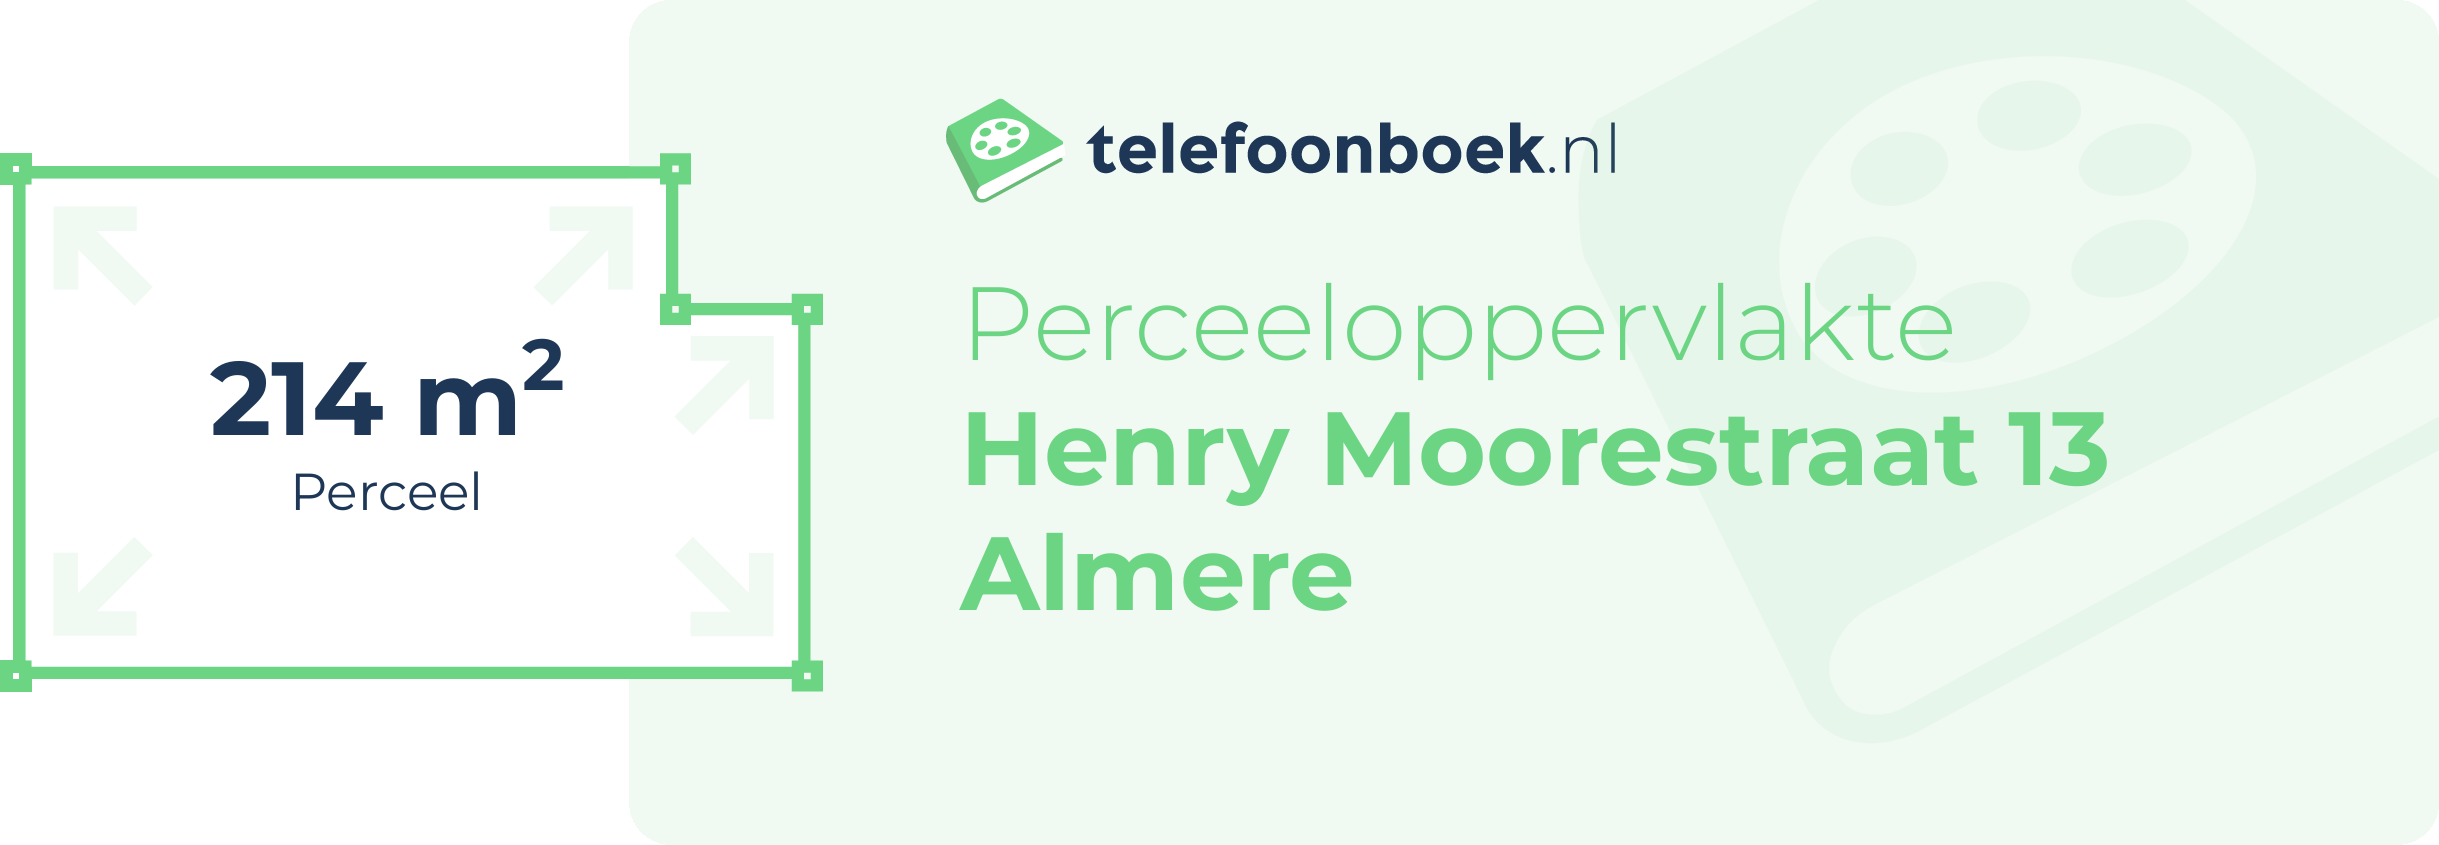 Perceeloppervlakte Henry Moorestraat 13 Almere